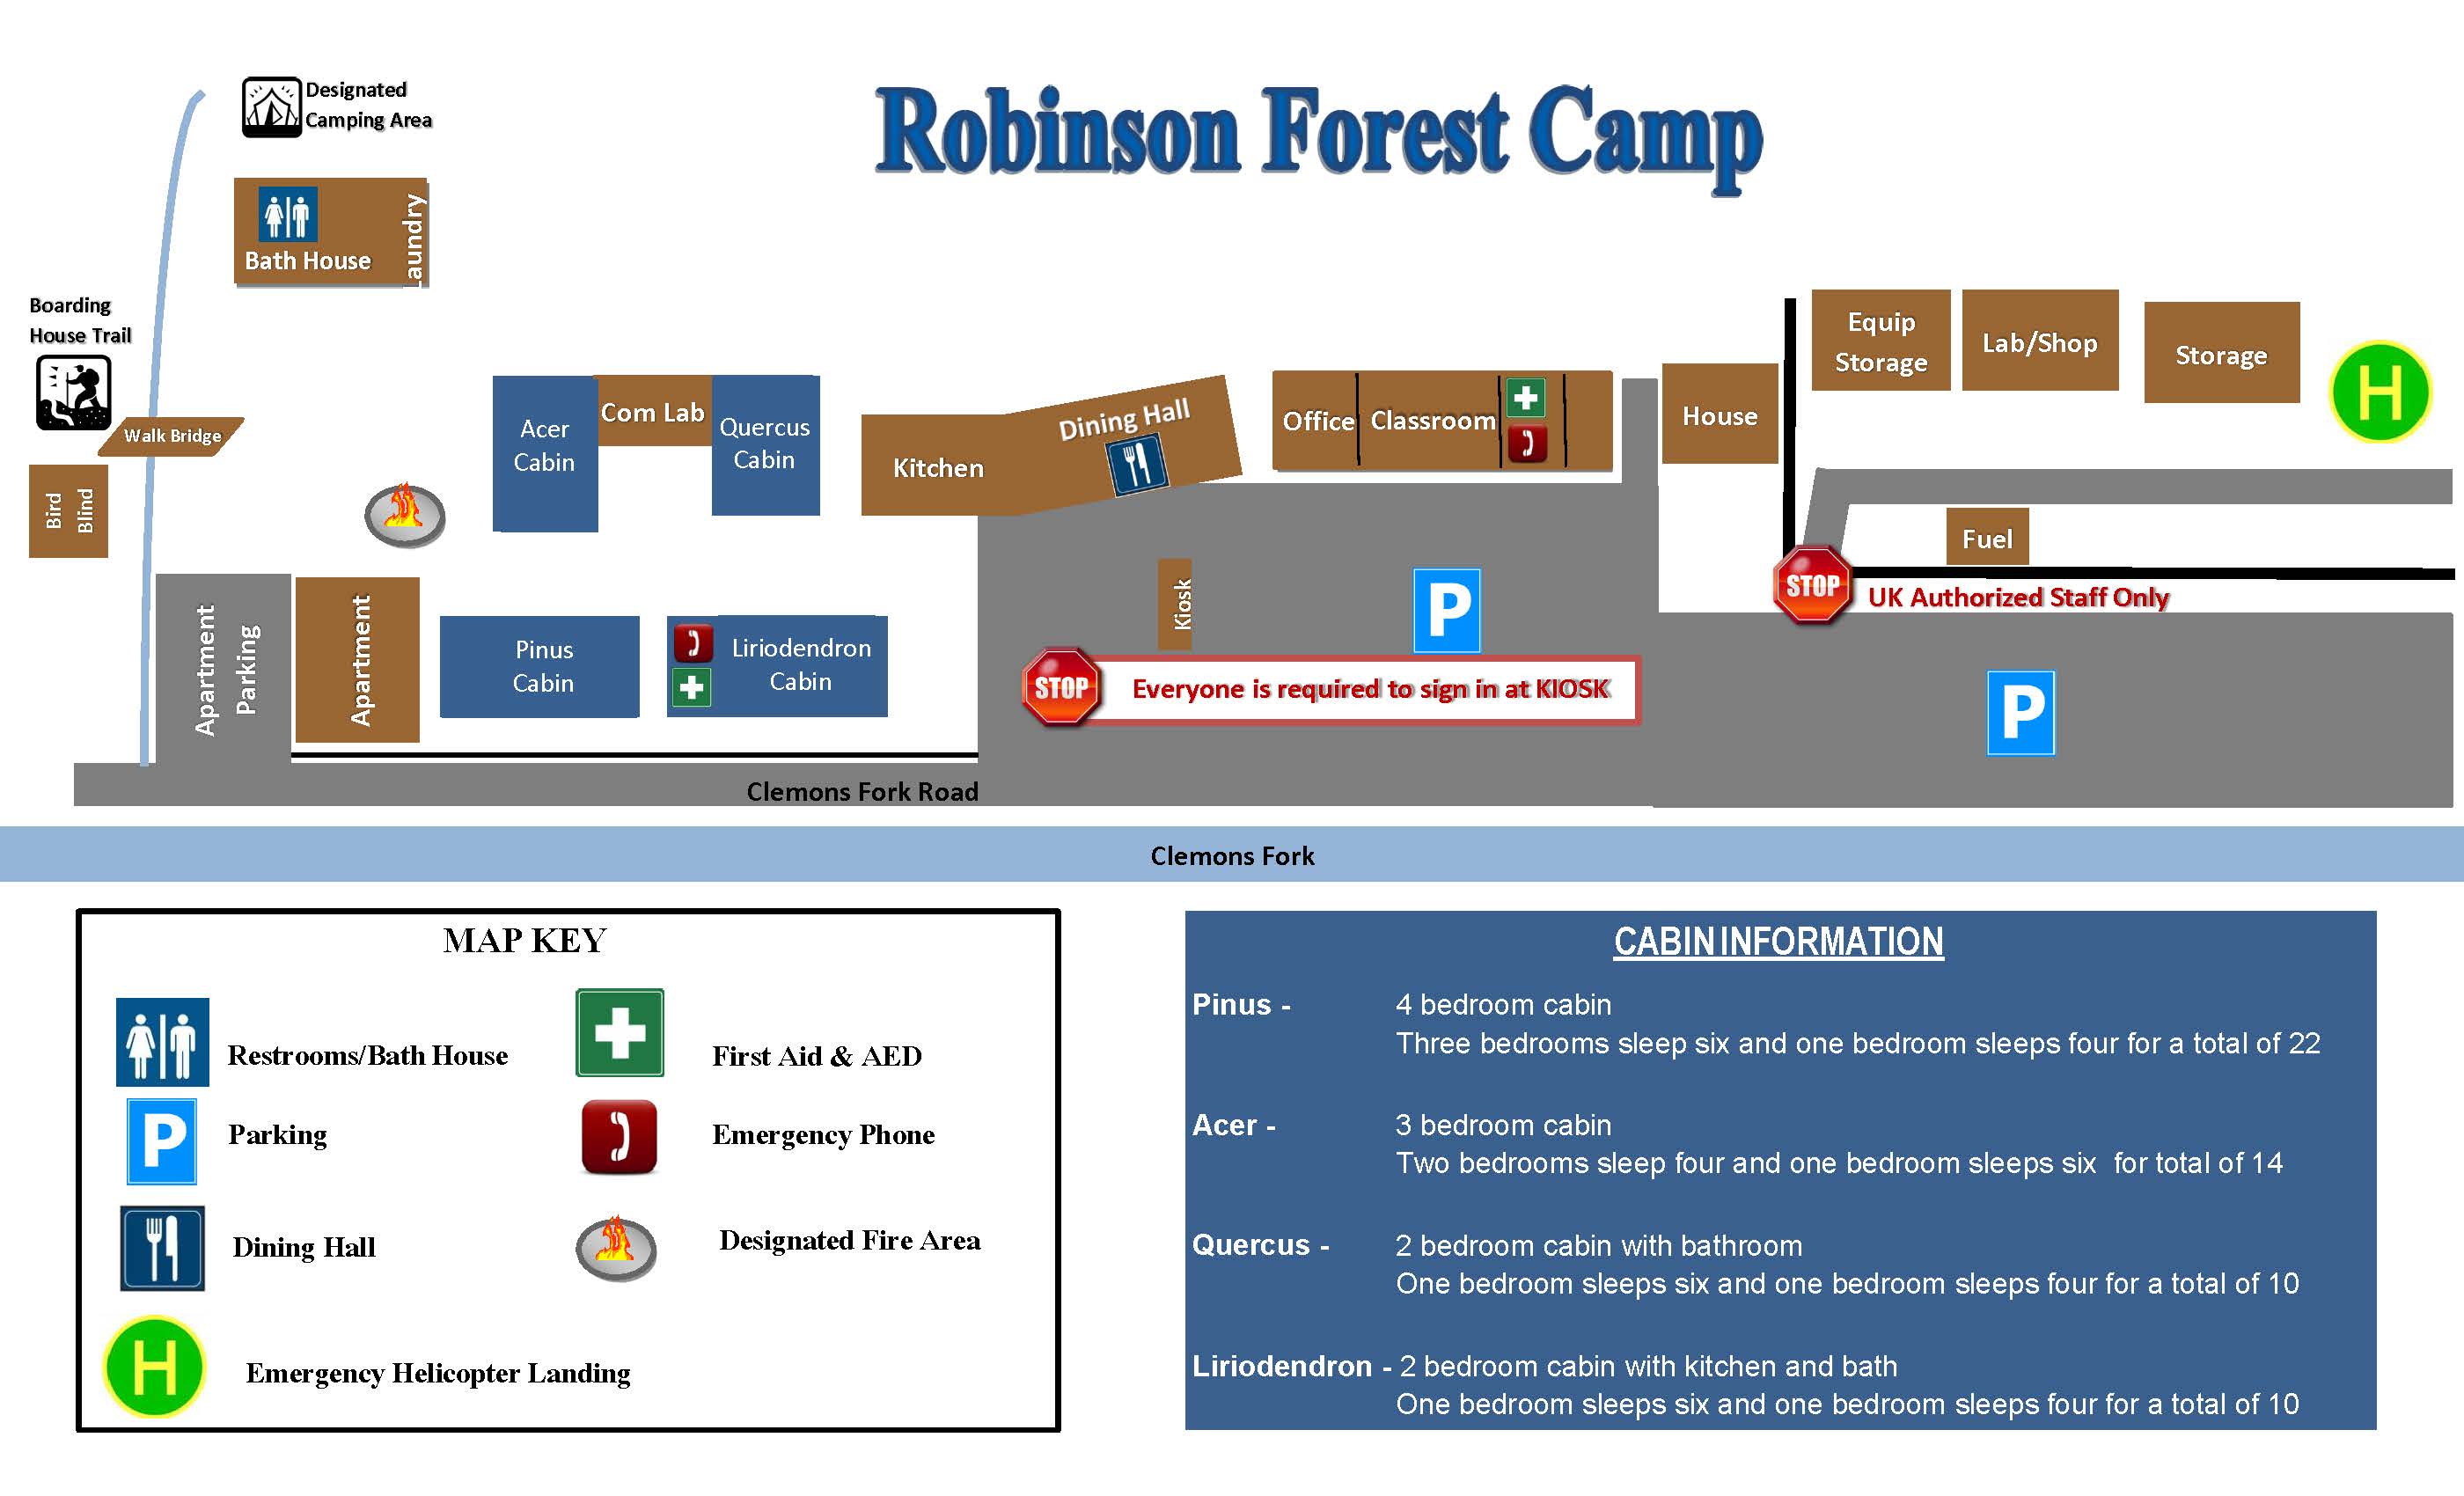 Camp map